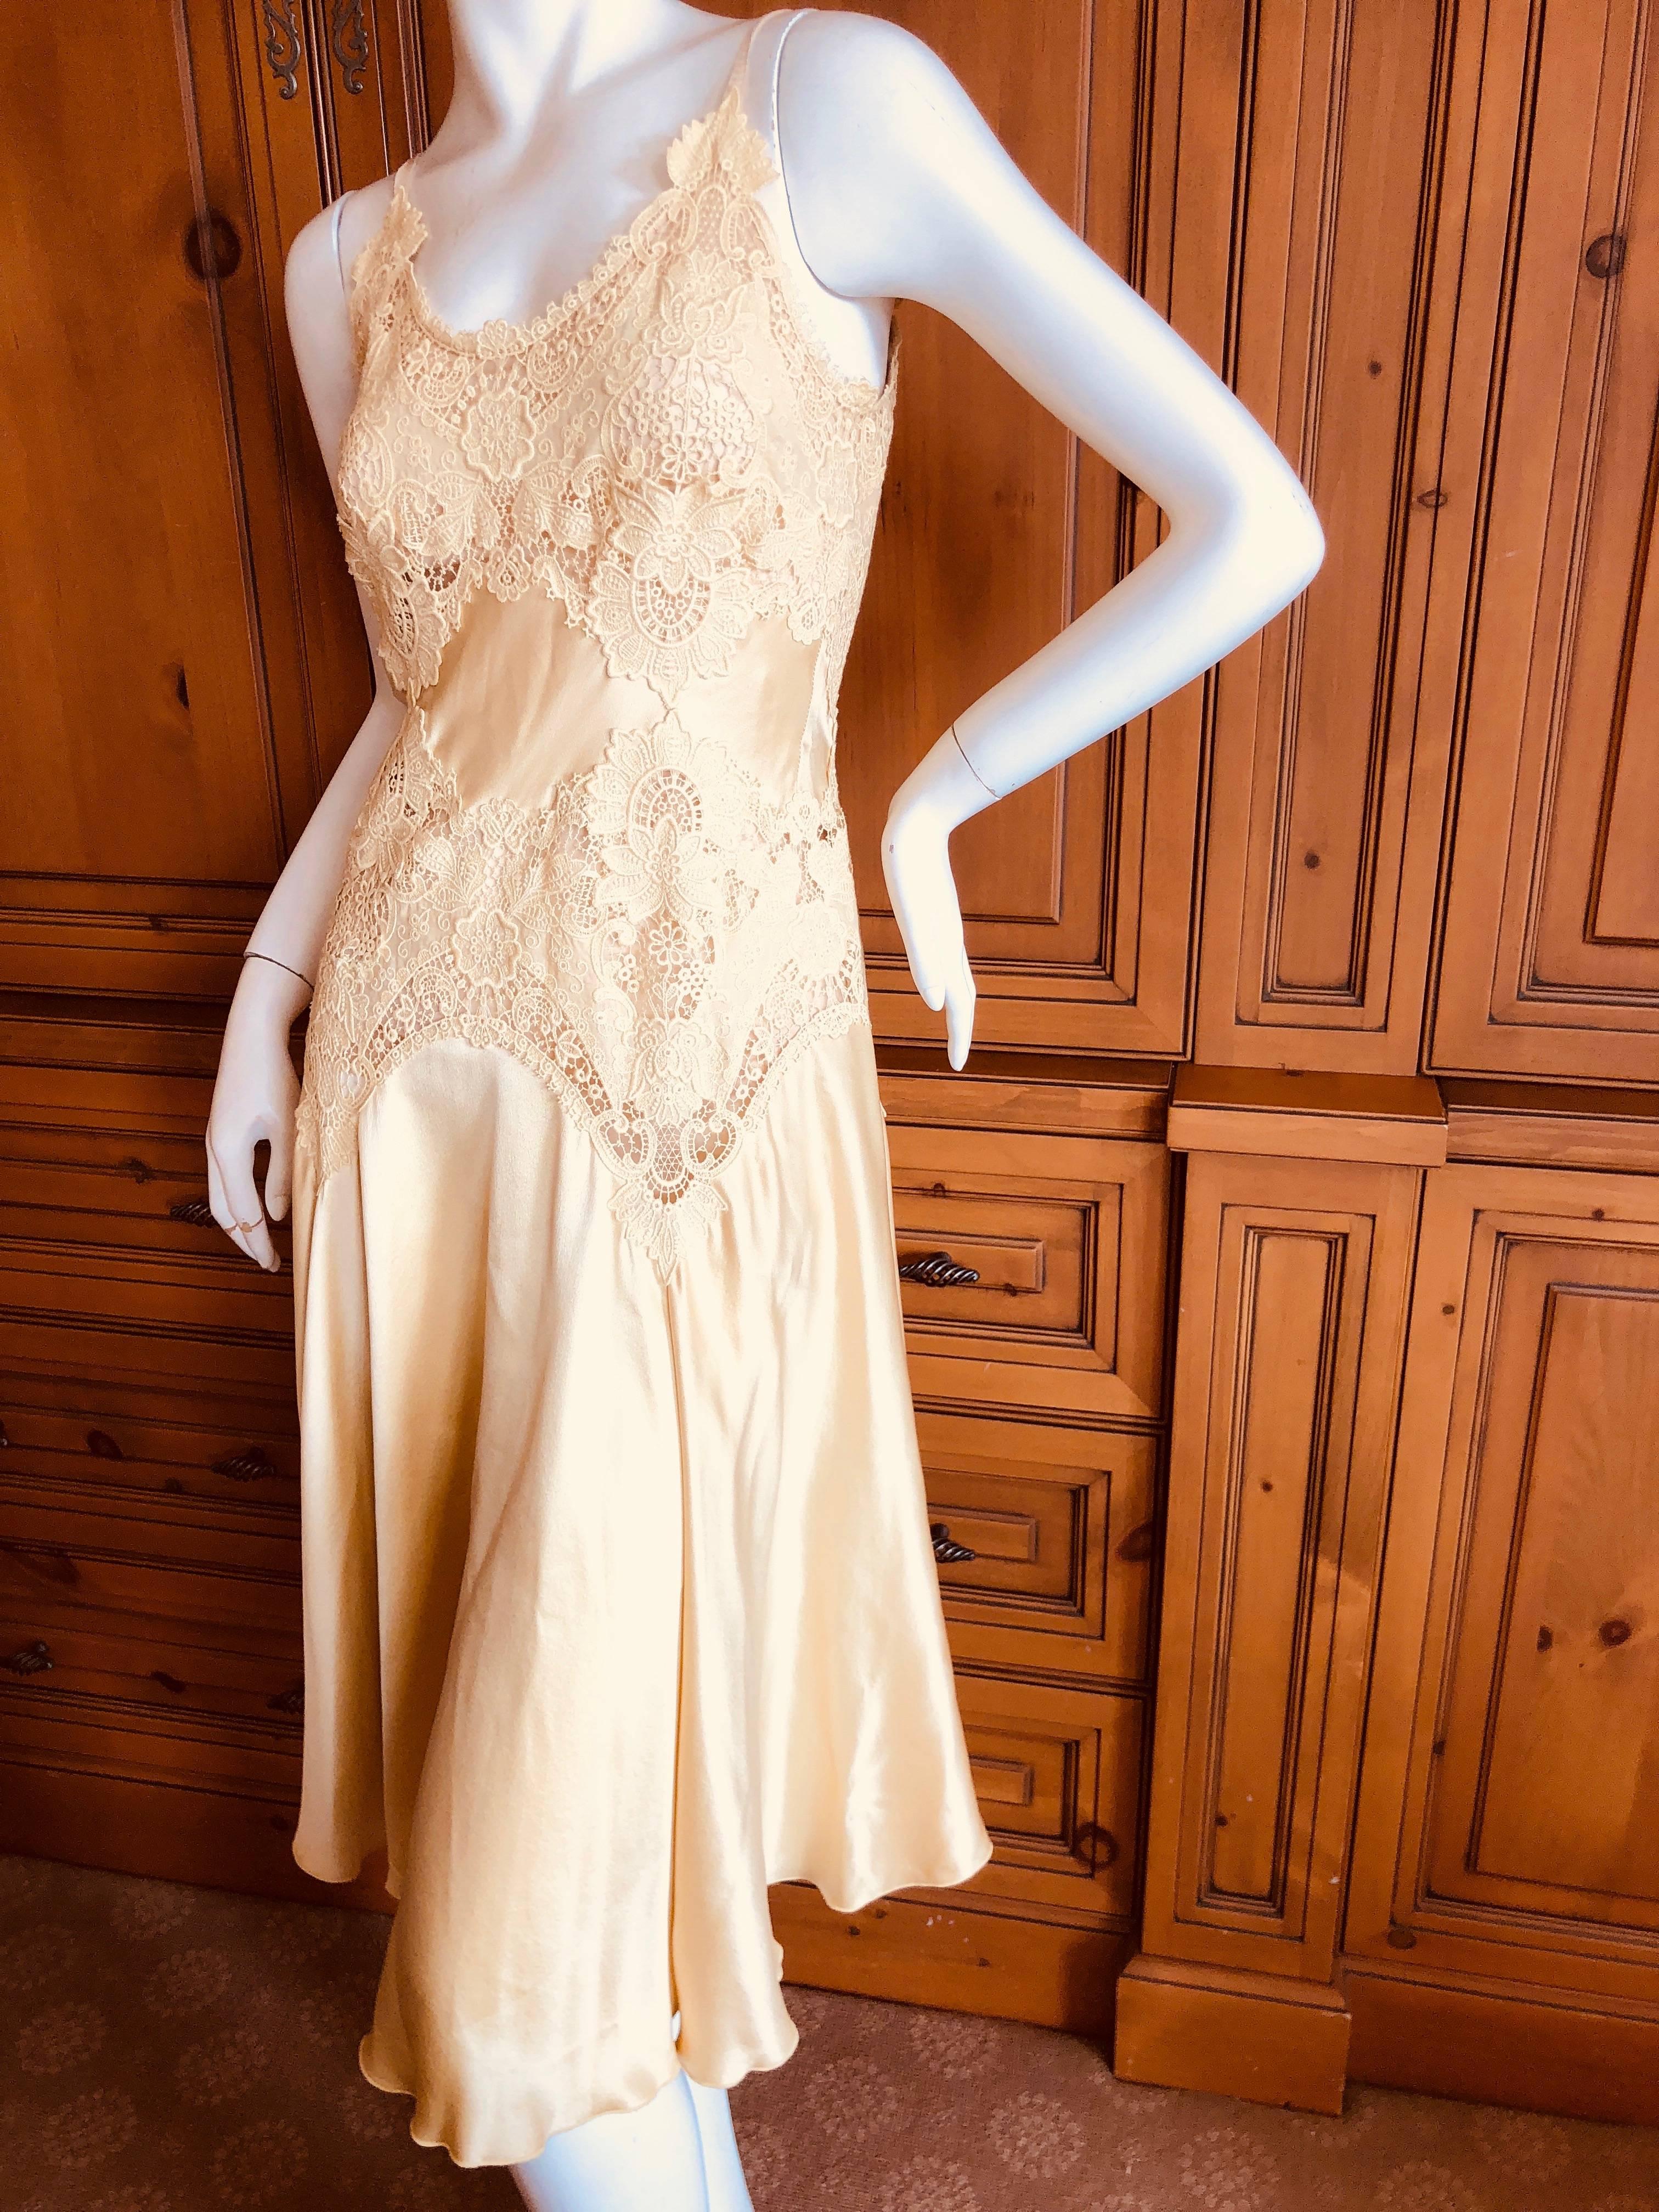 Alexander McQueen Romantic Butter Yellow Guipure Lace Dress 2004 For Sale 3